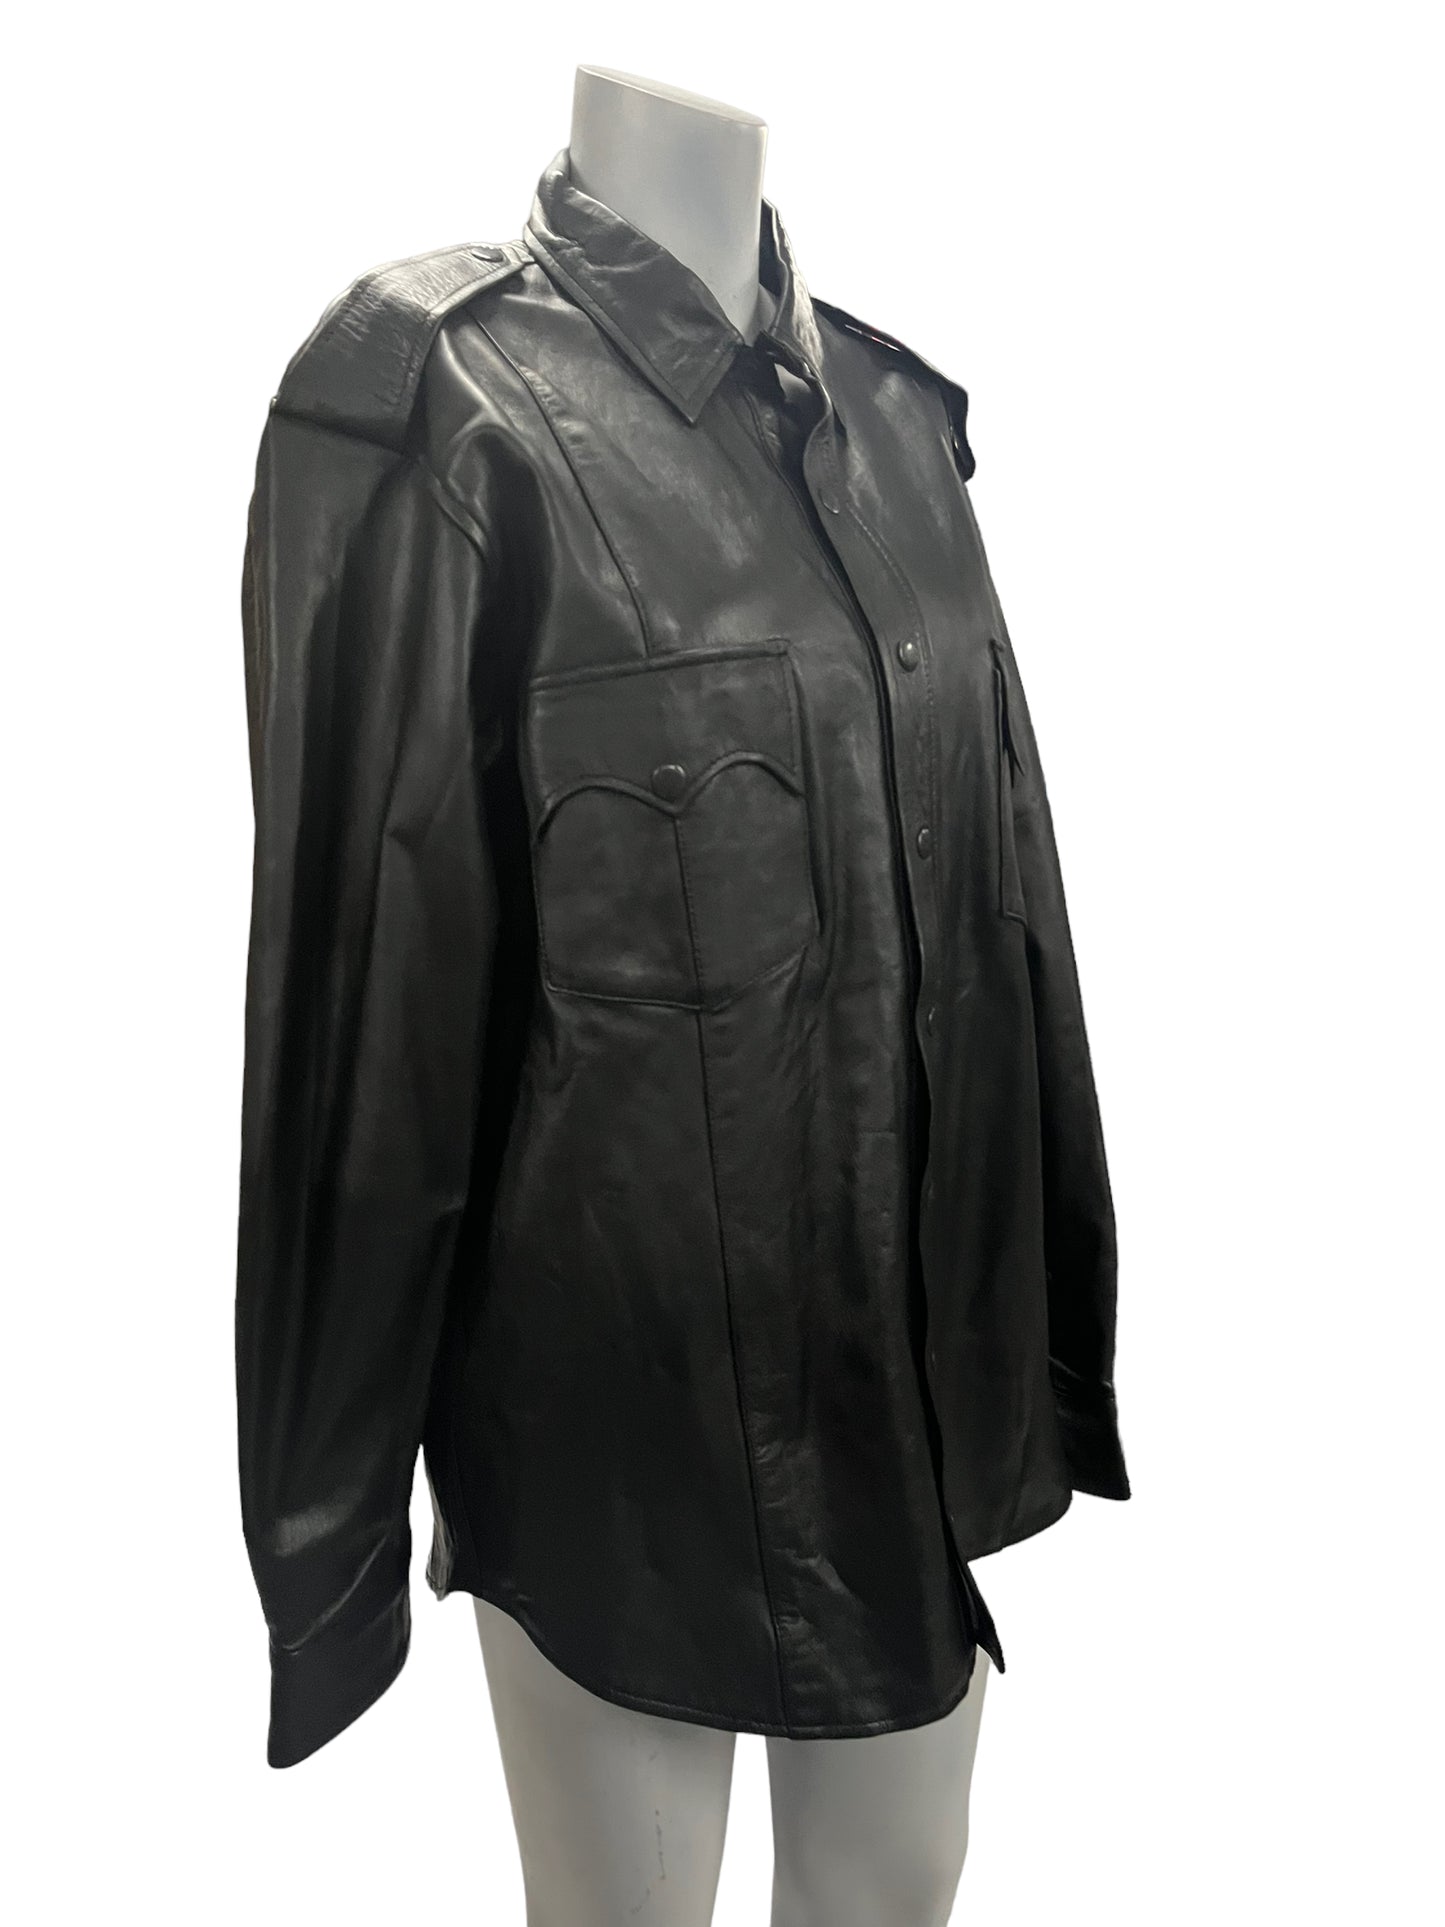 Fashion World - LL101 Black Leather Jacket - Size L